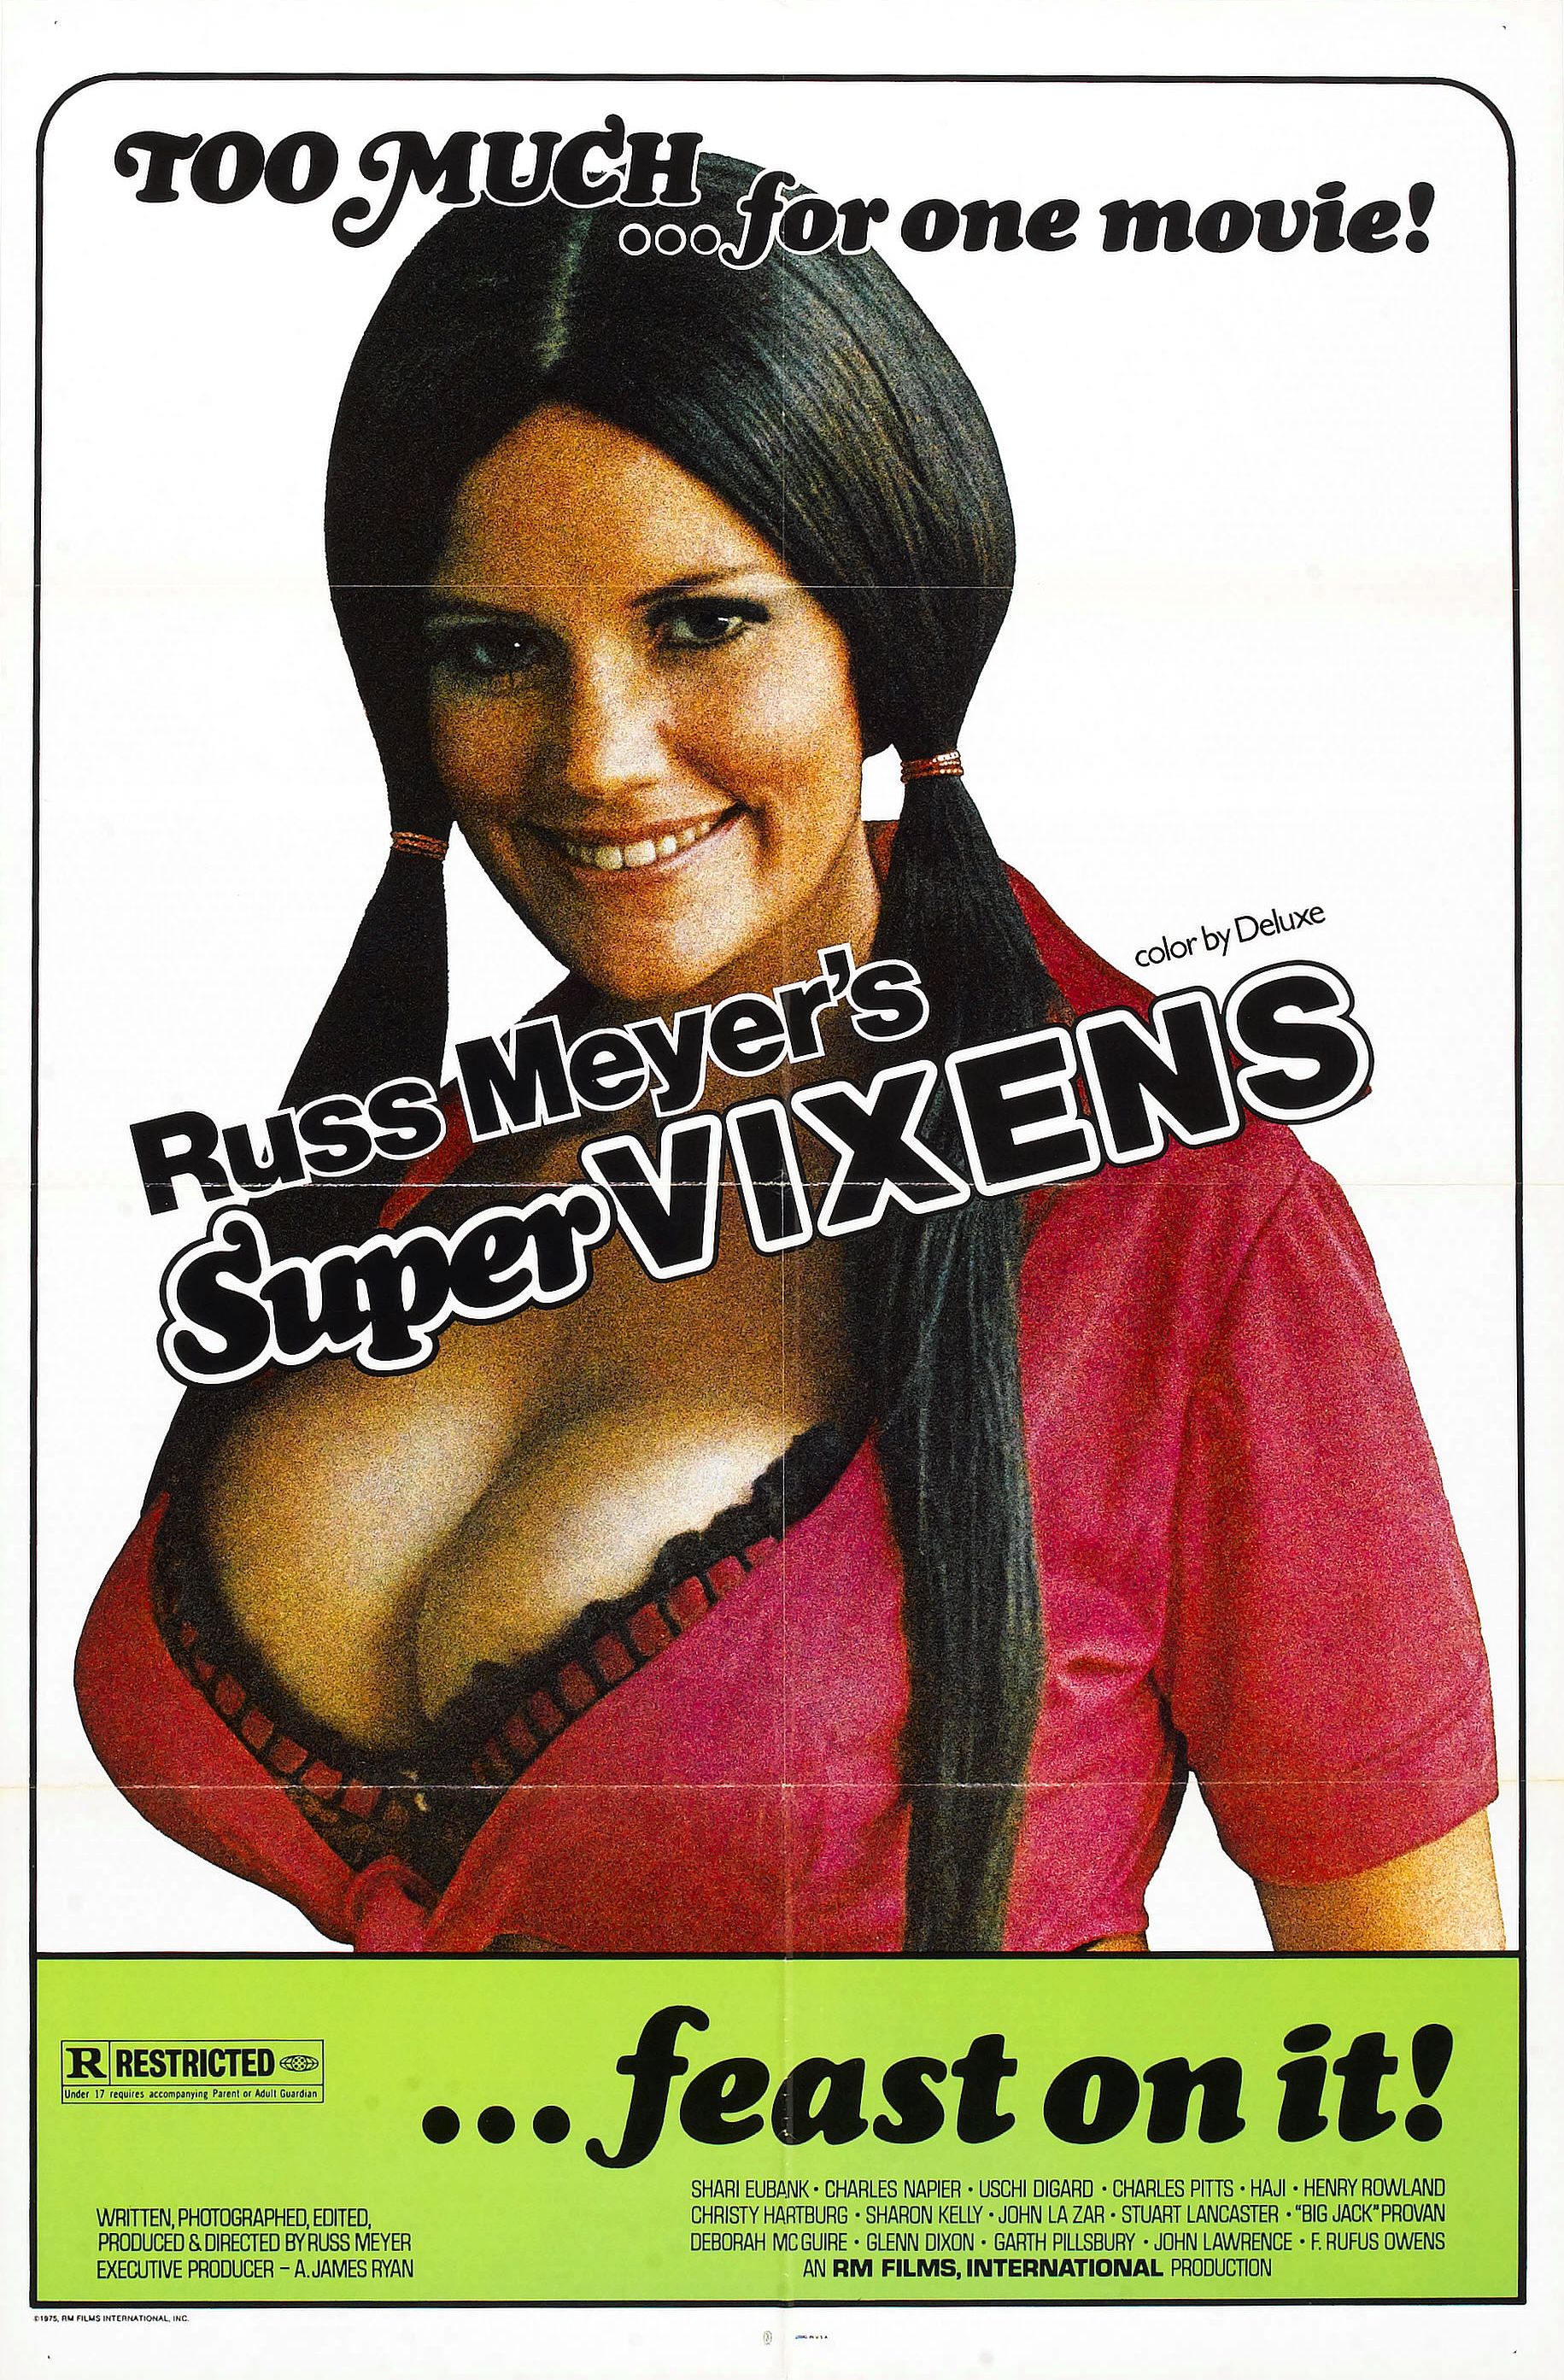 Supervixens (1975) 720p HDRip English Adult Movie [1GB]